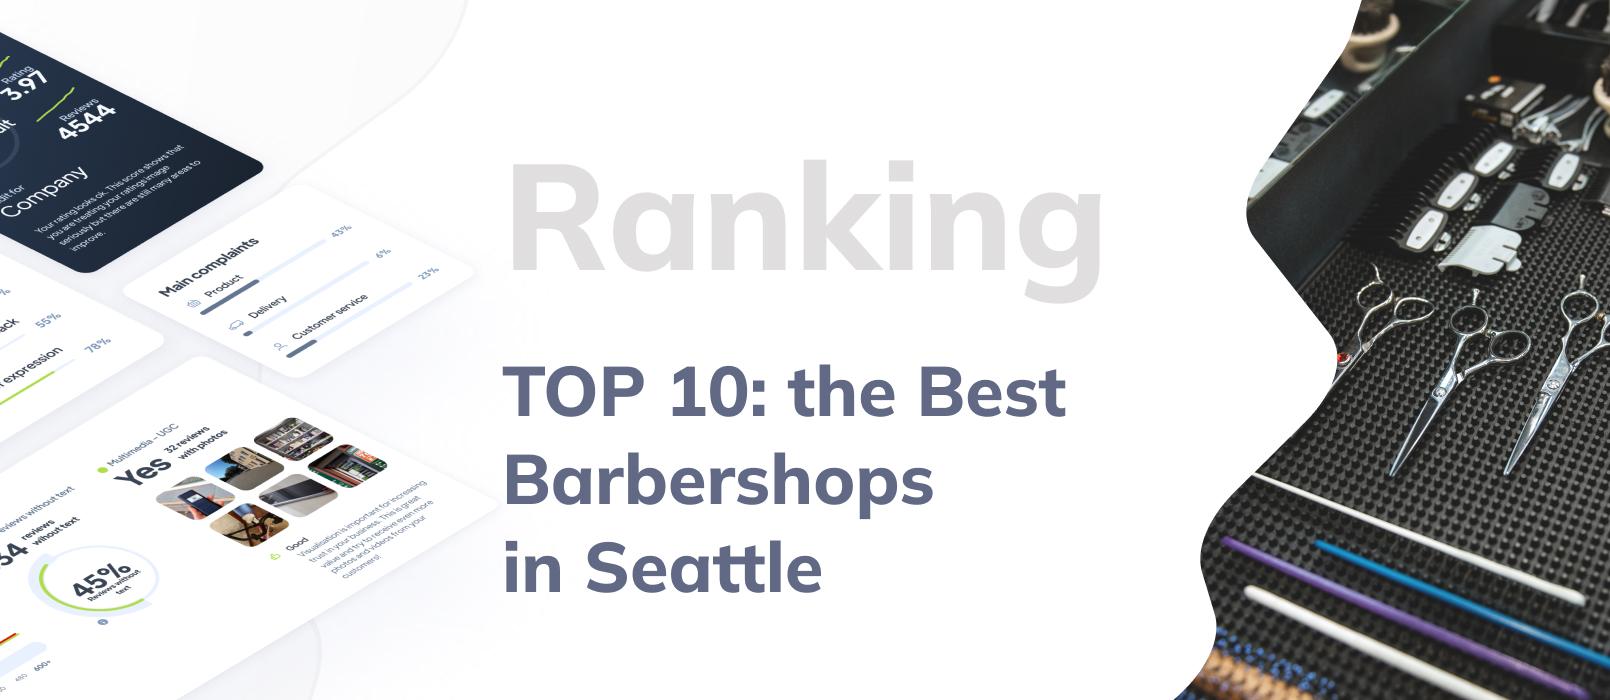 TOP 10 of the Best Barbershops in Seattle - Ranking